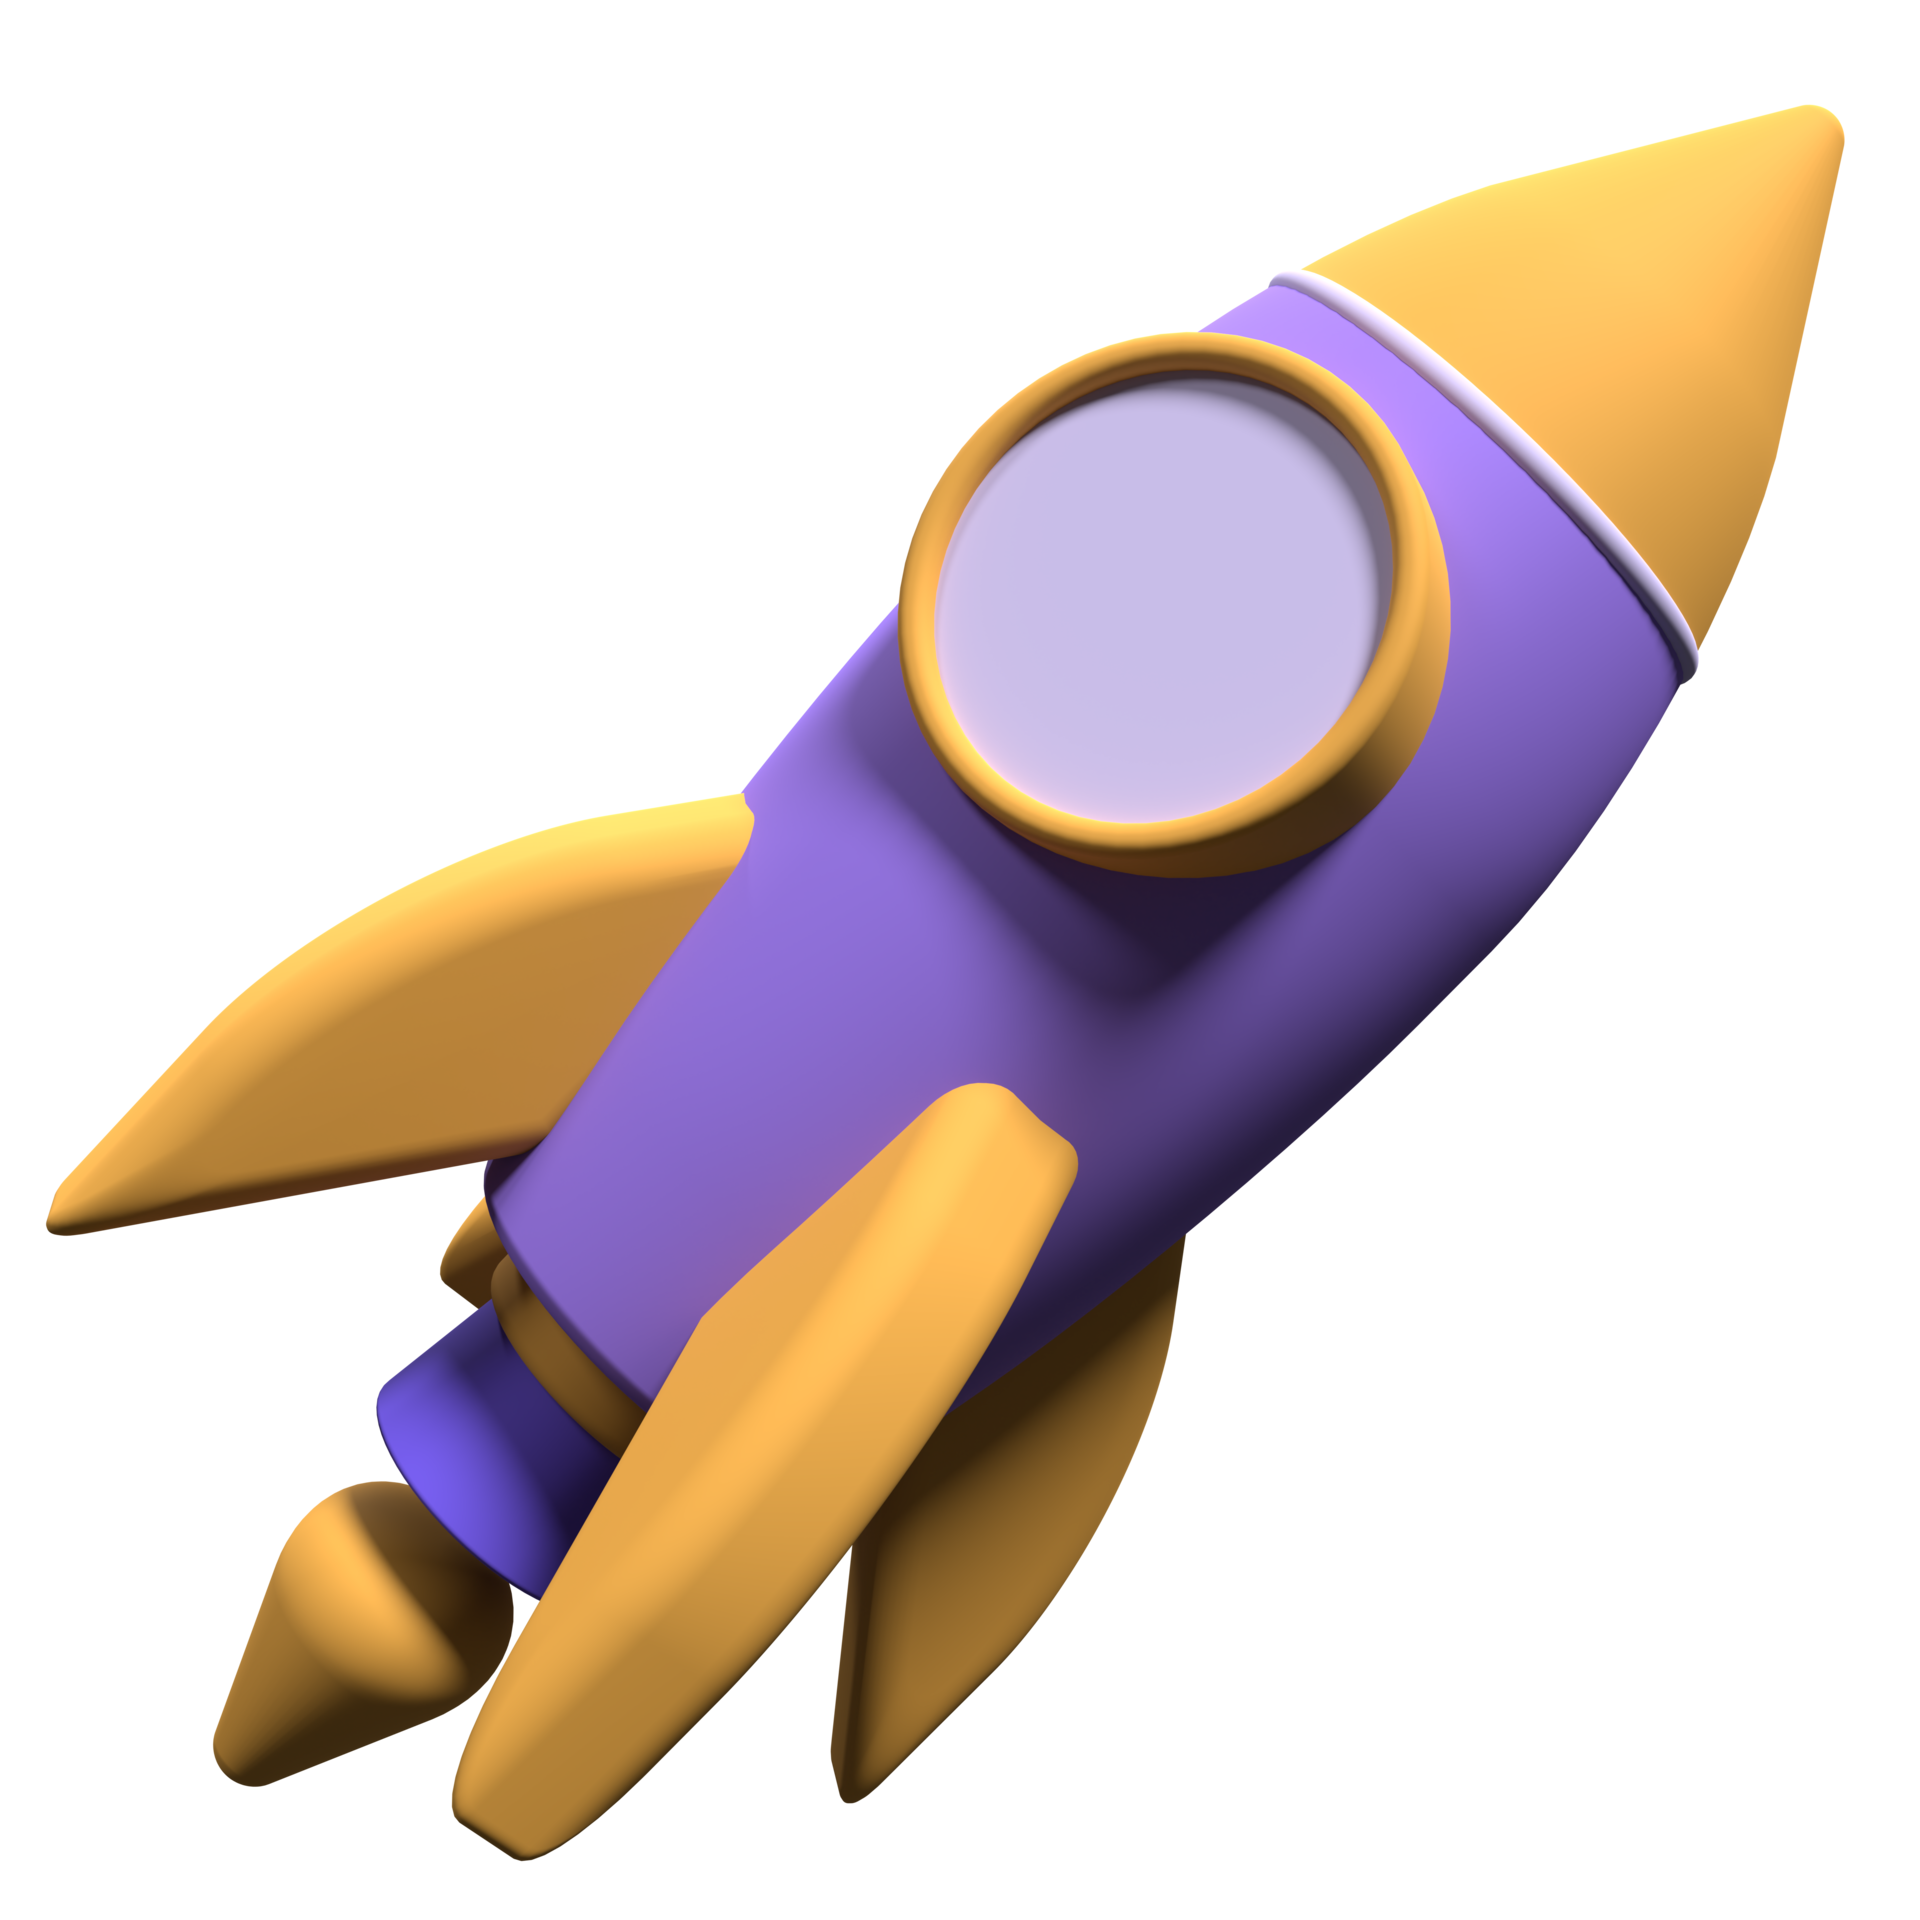 Free 3d render rocker cartoon. 3d space rocket icon. Spaceship icon. 3d  render of rocket on transparent background. 3d render illustration 19900785  PNG with Transparent Background